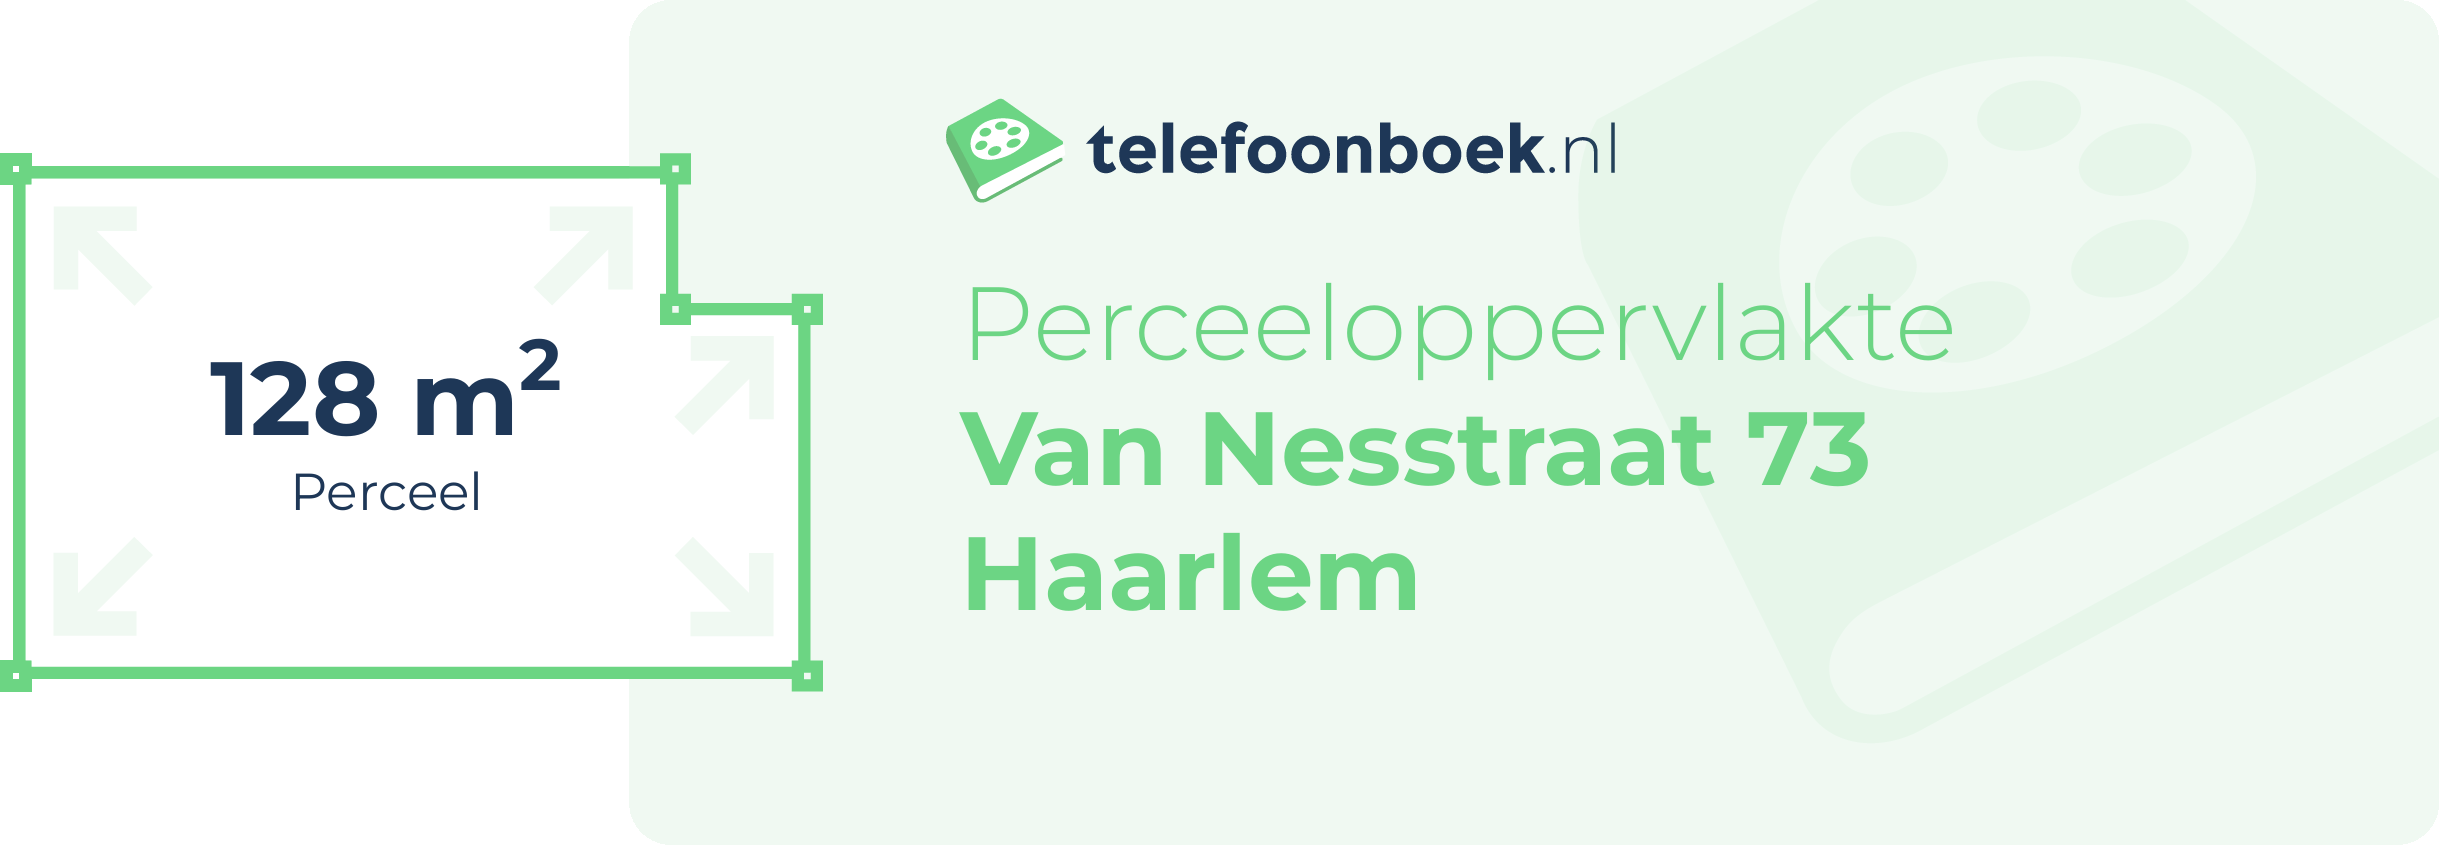 Perceeloppervlakte Van Nesstraat 73 Haarlem